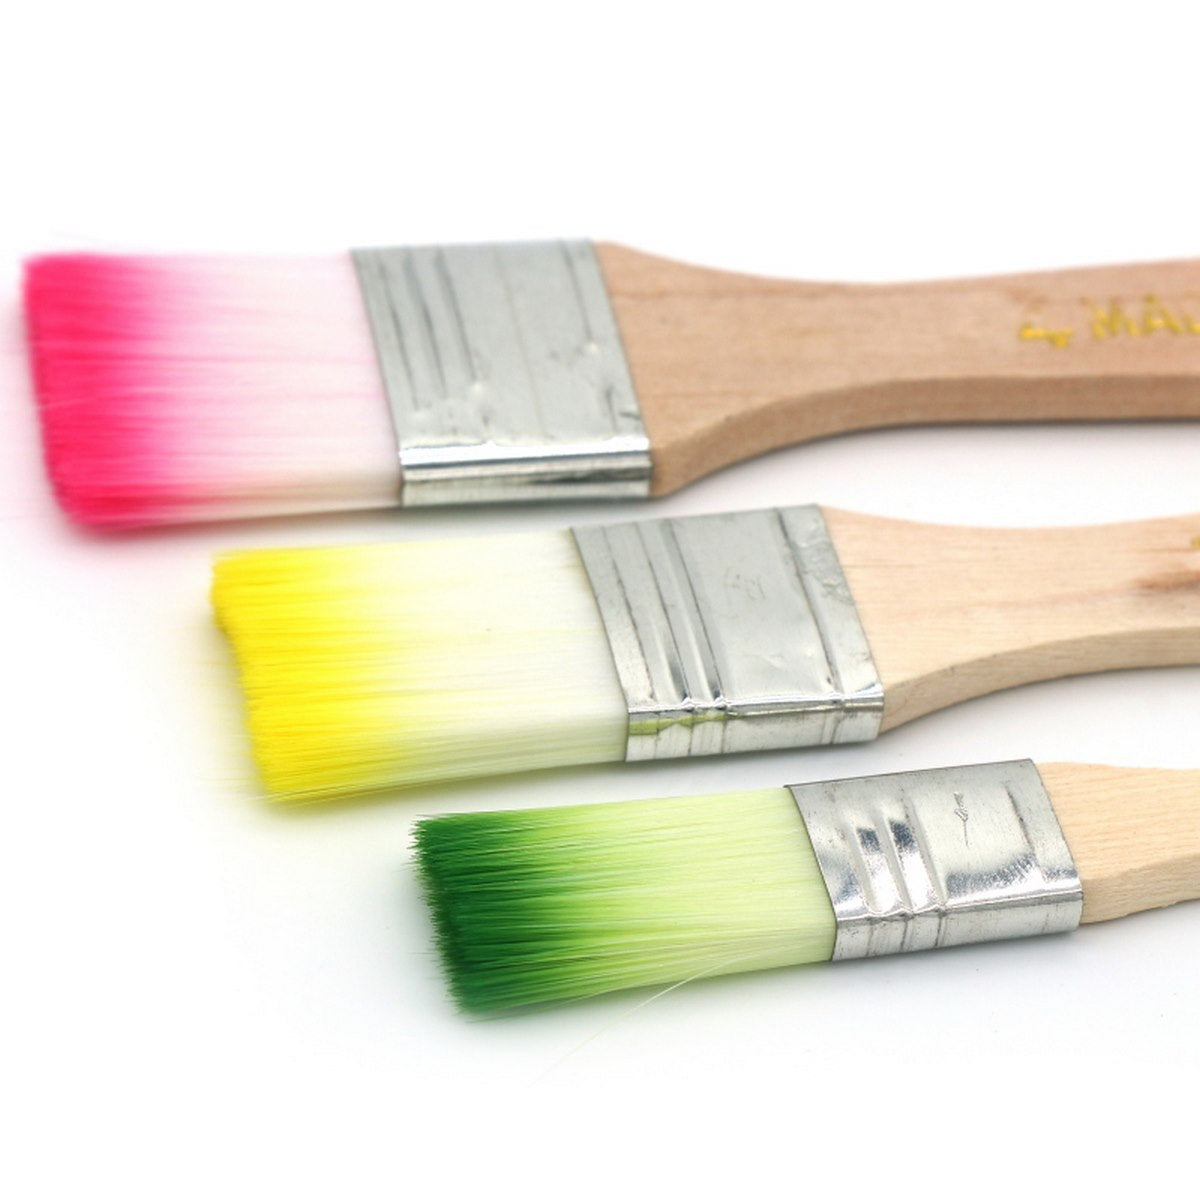 jags-mumbai Brush Painting Brush 3pcs Set B-345A